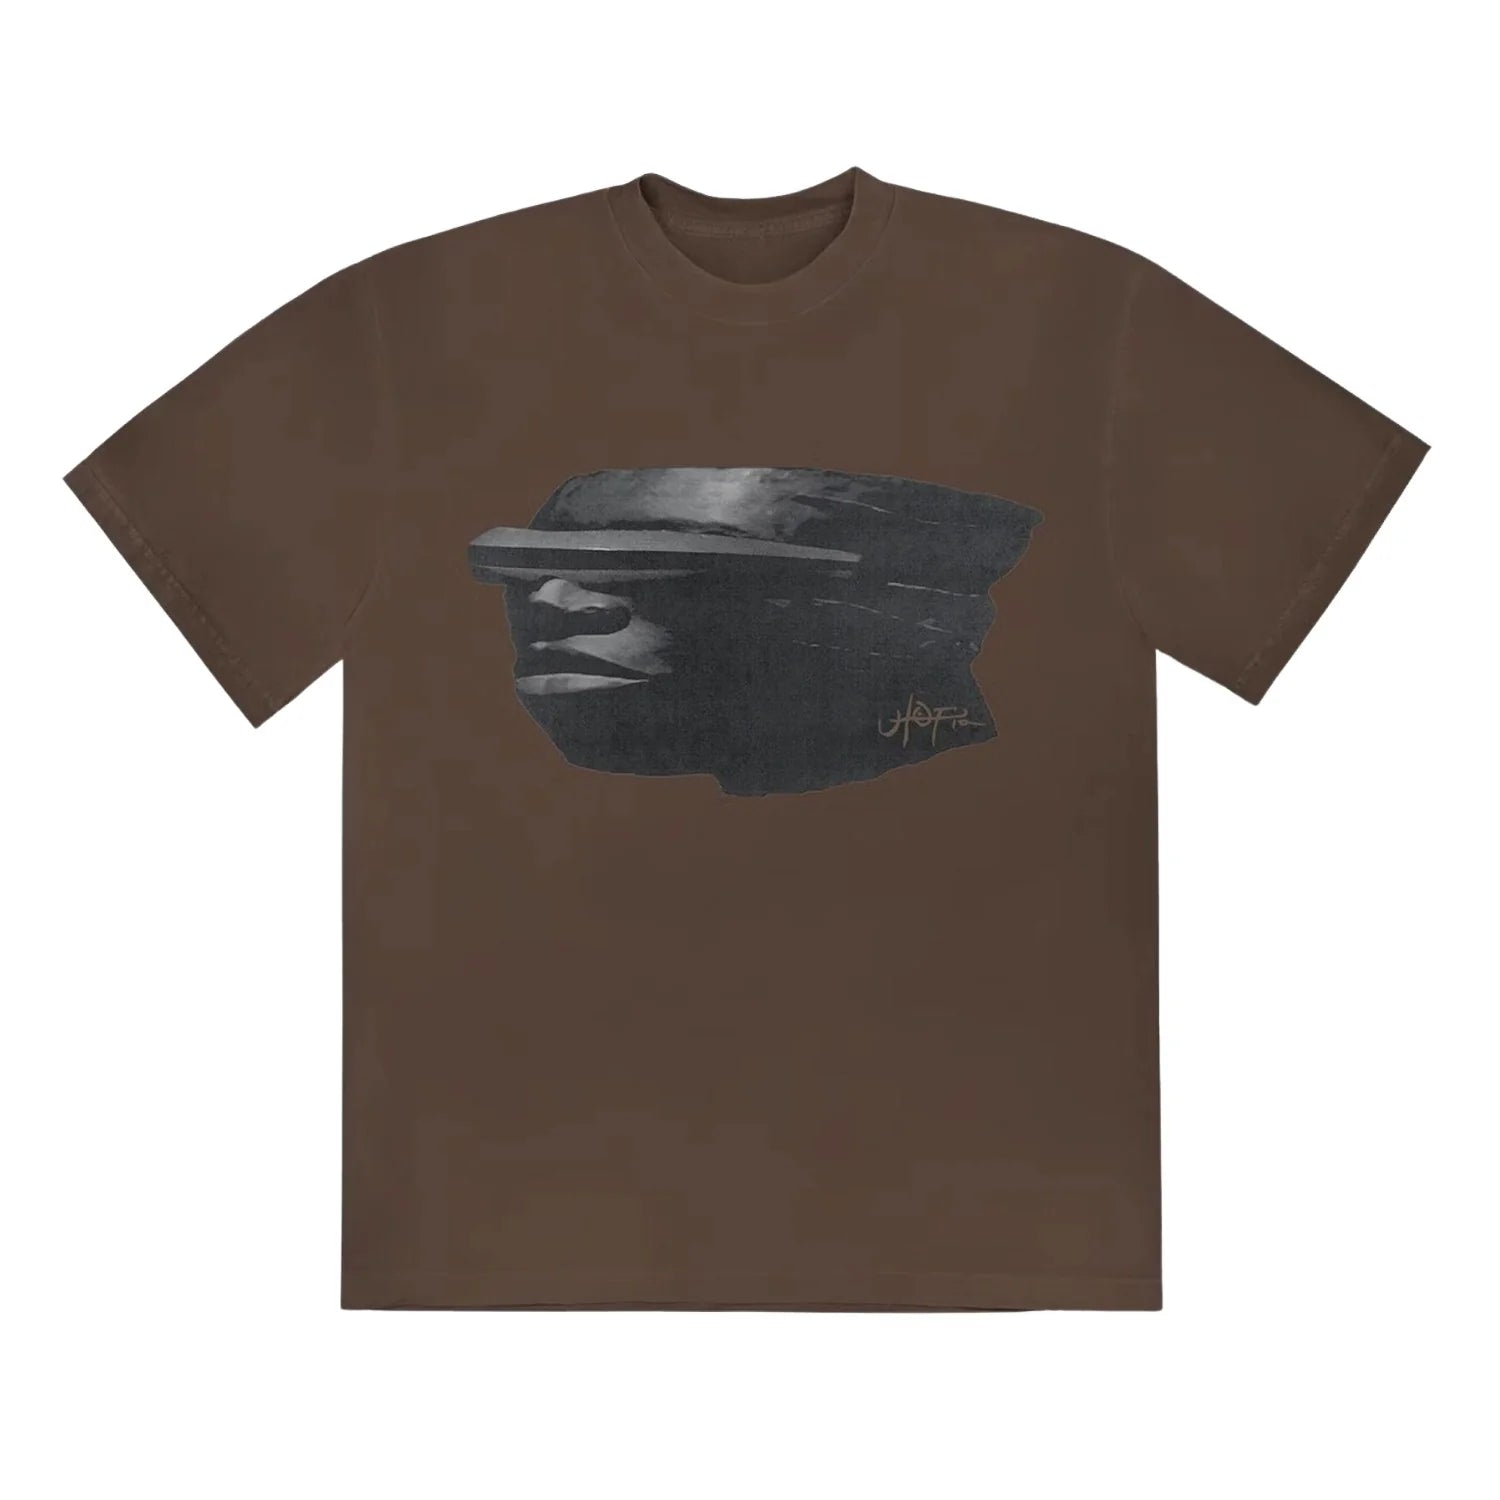 Travis Scott Cactus Jack Utopia C2 T-Shirt Brown